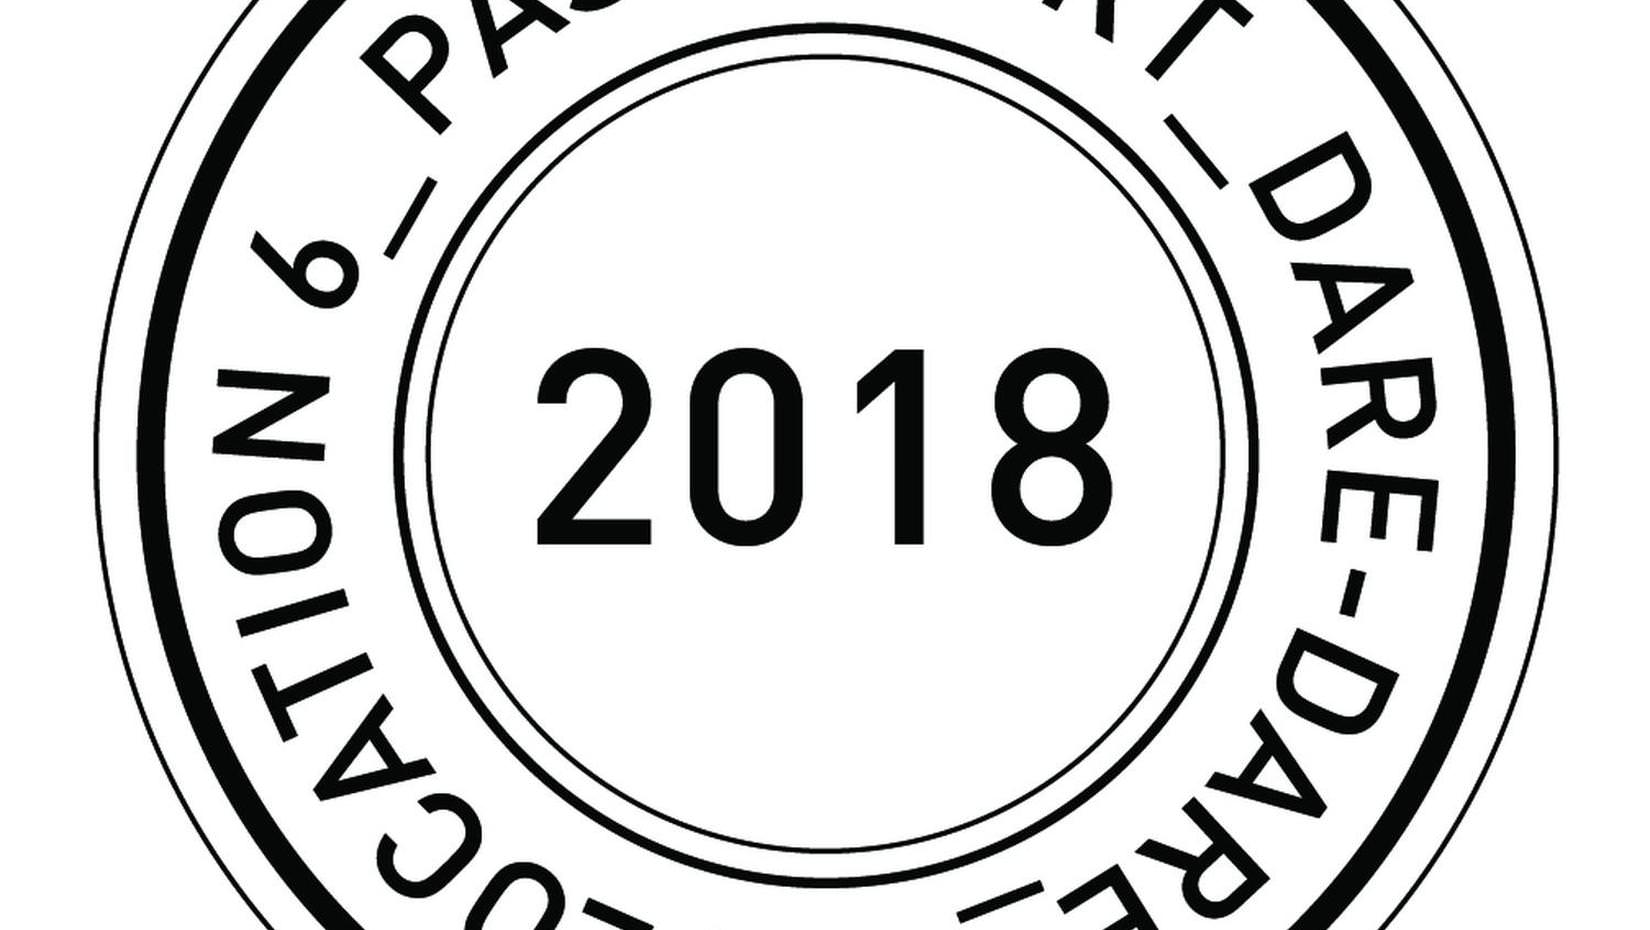 PASSPORT 2018 + Festive evening